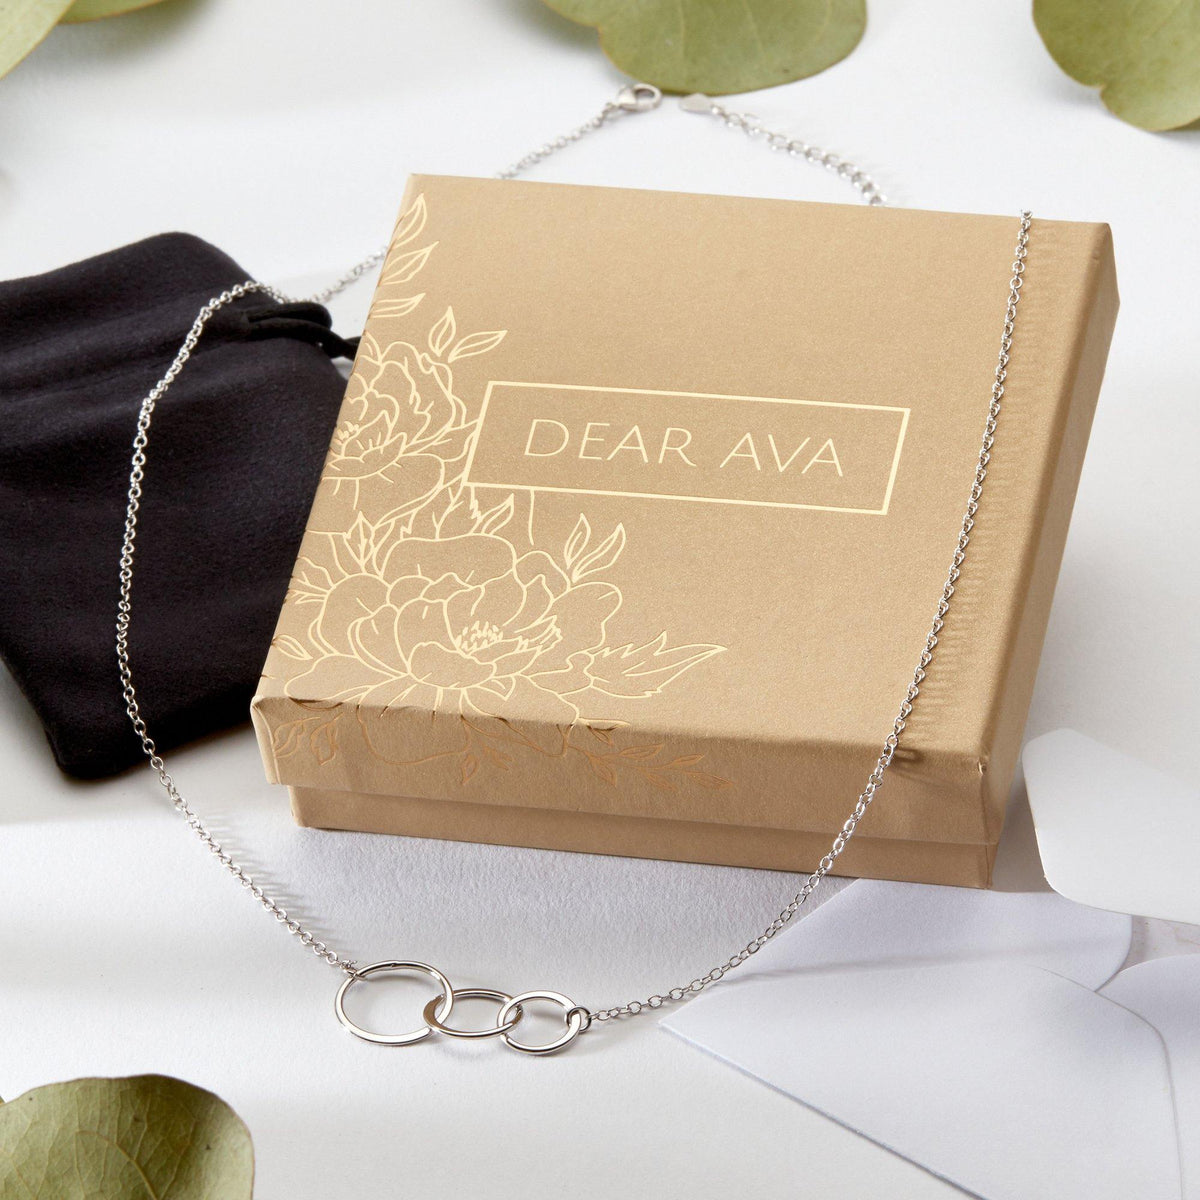 31st Birthday Necklace - Dear Ava, Jewelry / Necklaces / Pendants